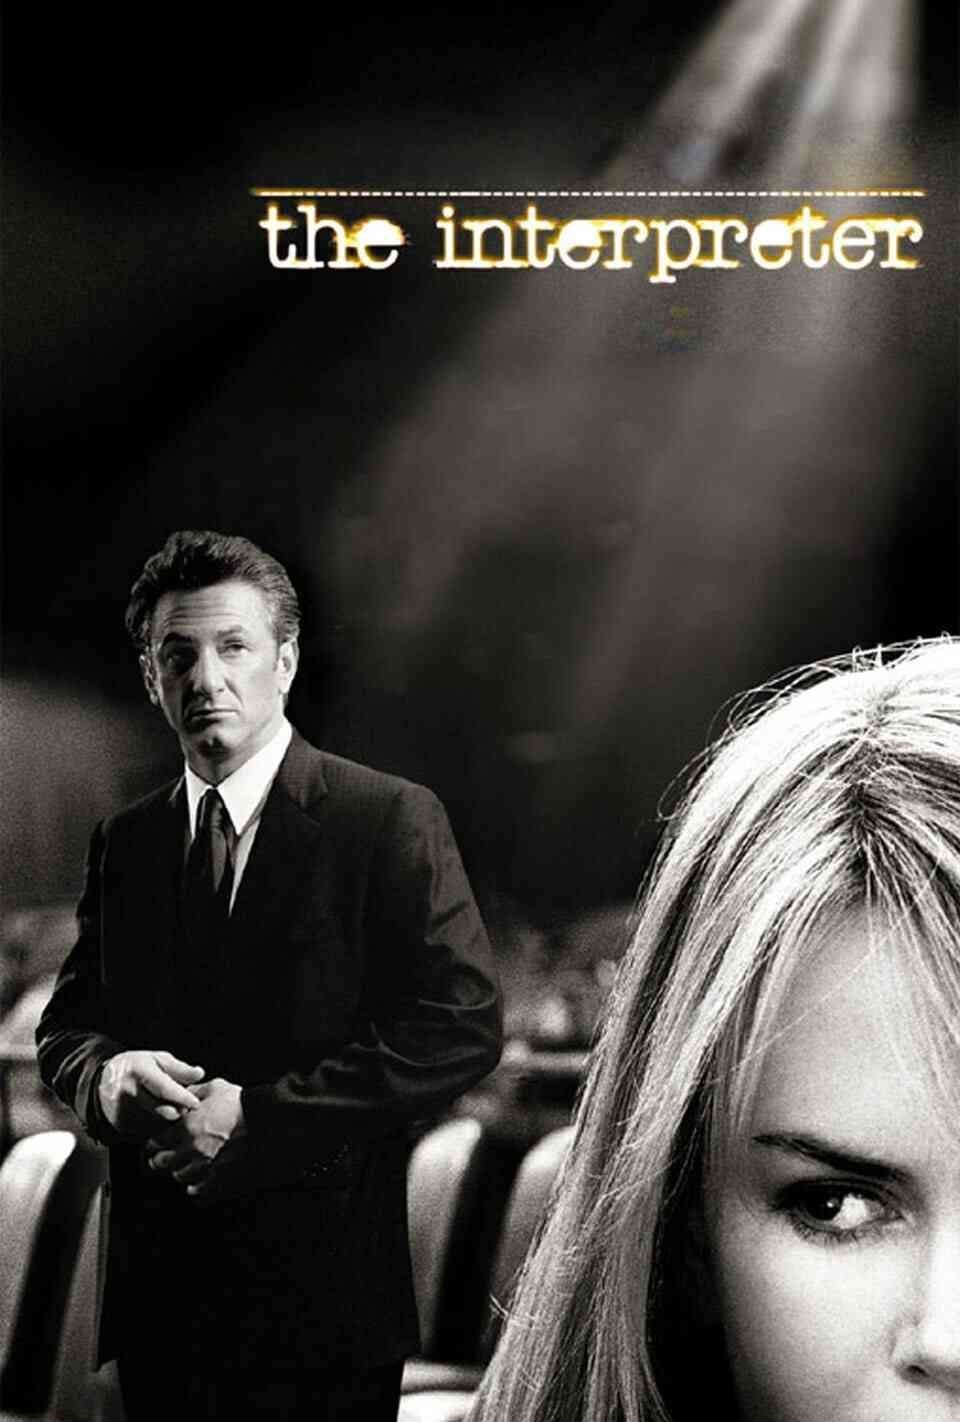 Read The Interpreter screenplay (poster)